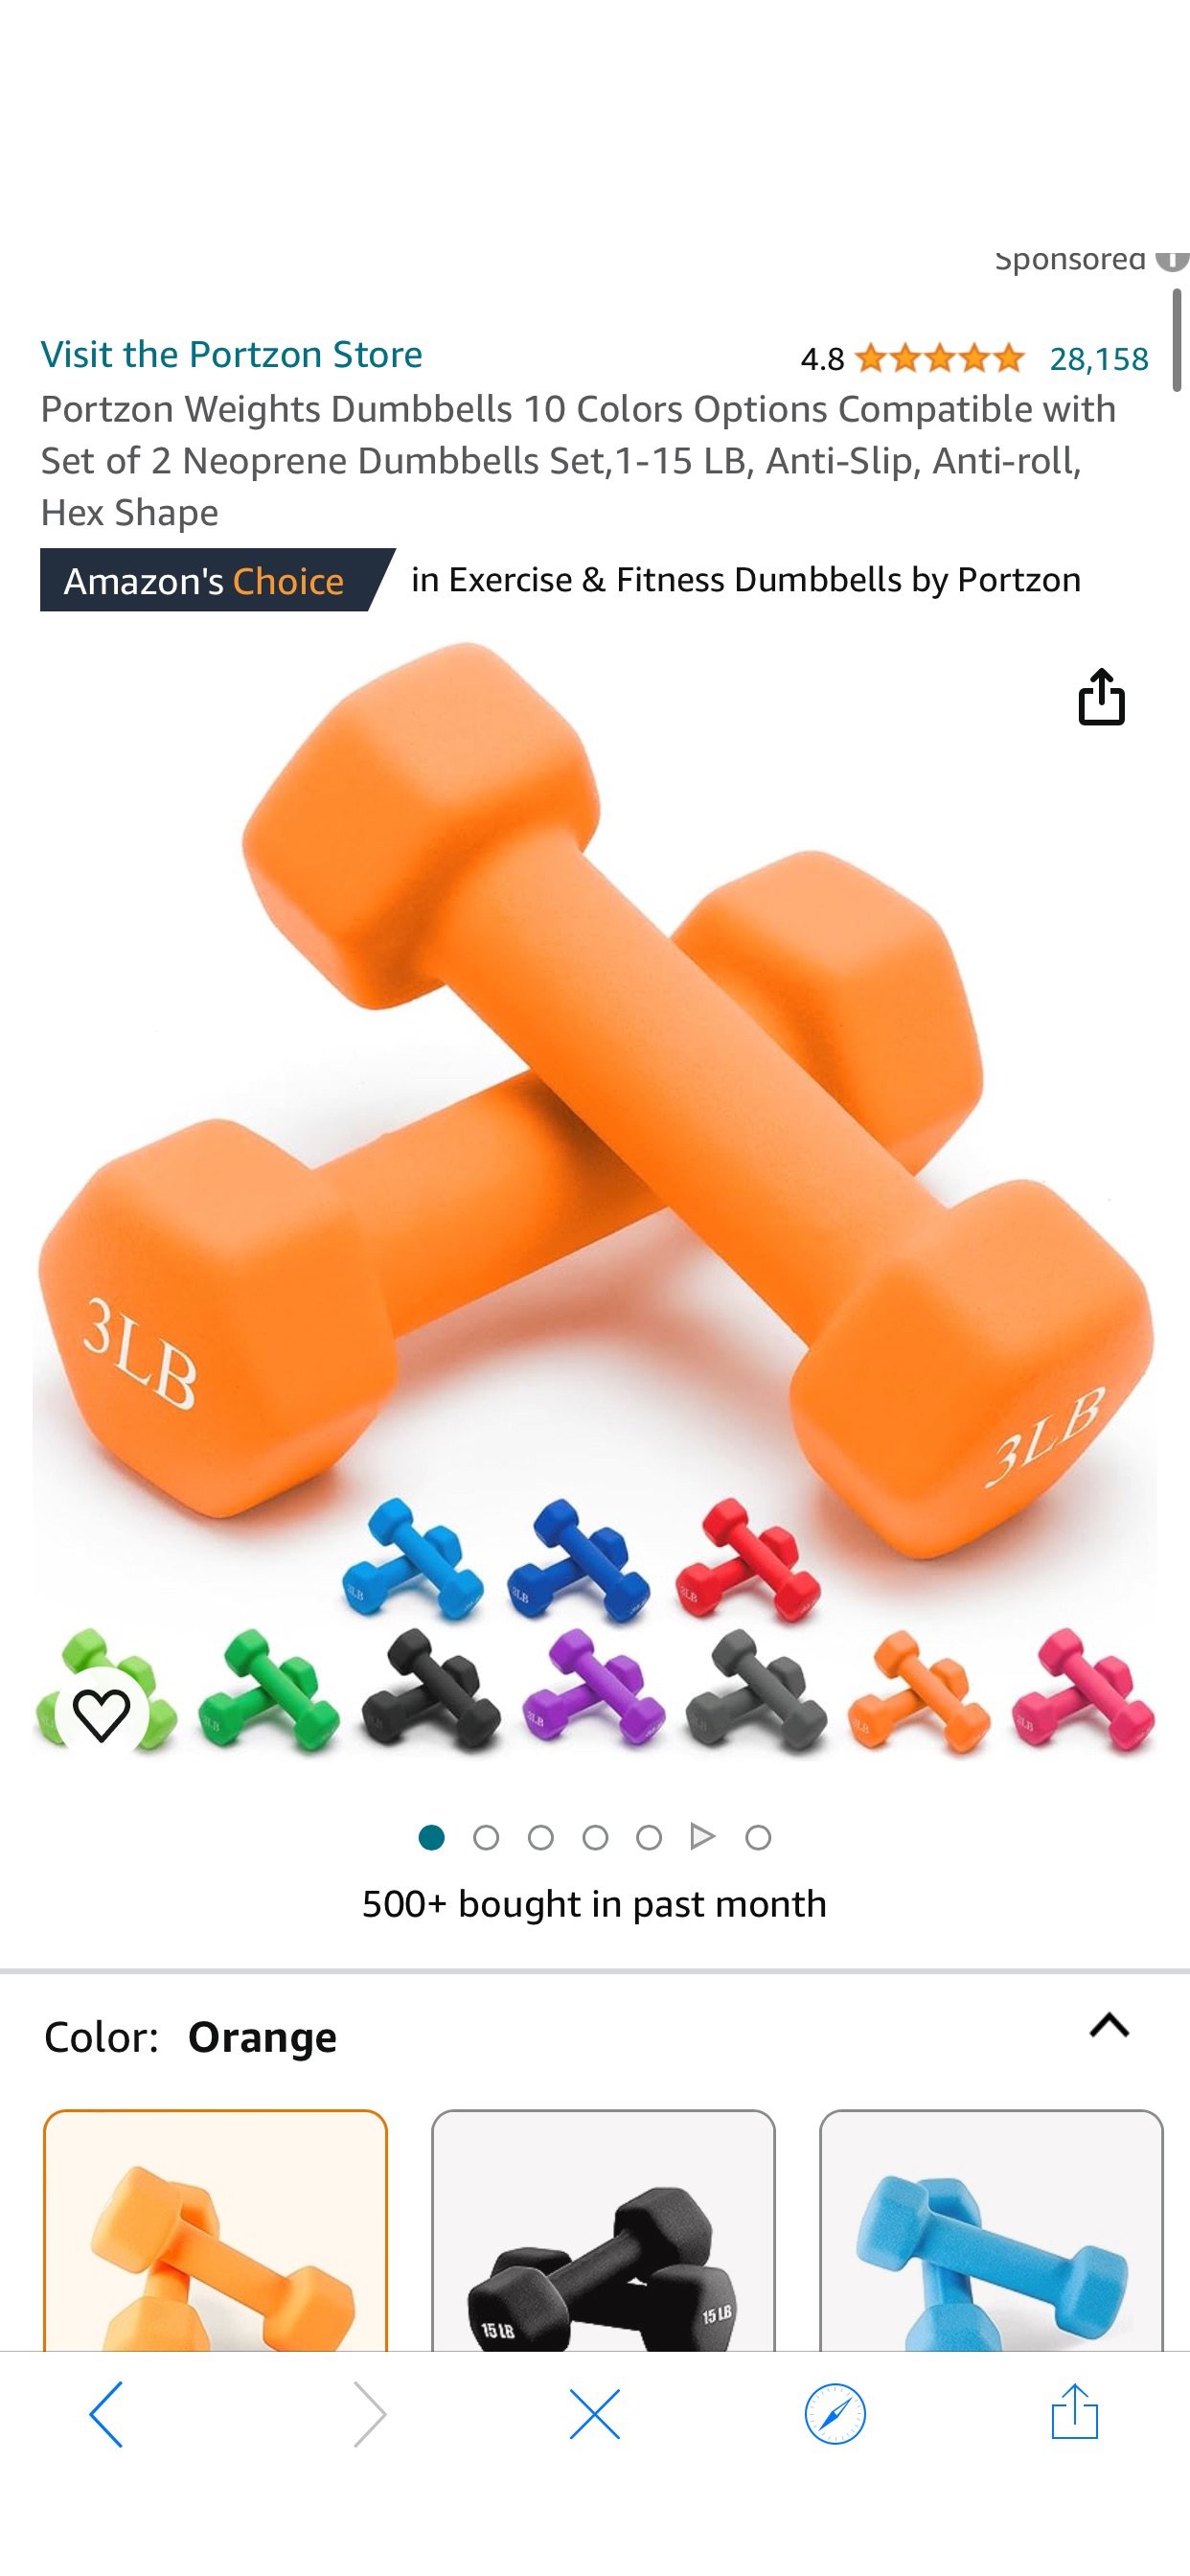 Amazon.com : Portzon Weights Orange Dumbbells with Set of 2 Neoprene Dumbbells Set, 3 LB, Anti-Slip, Anti-roll, Hex Shape : Sports & Outdoors 哑铃一对